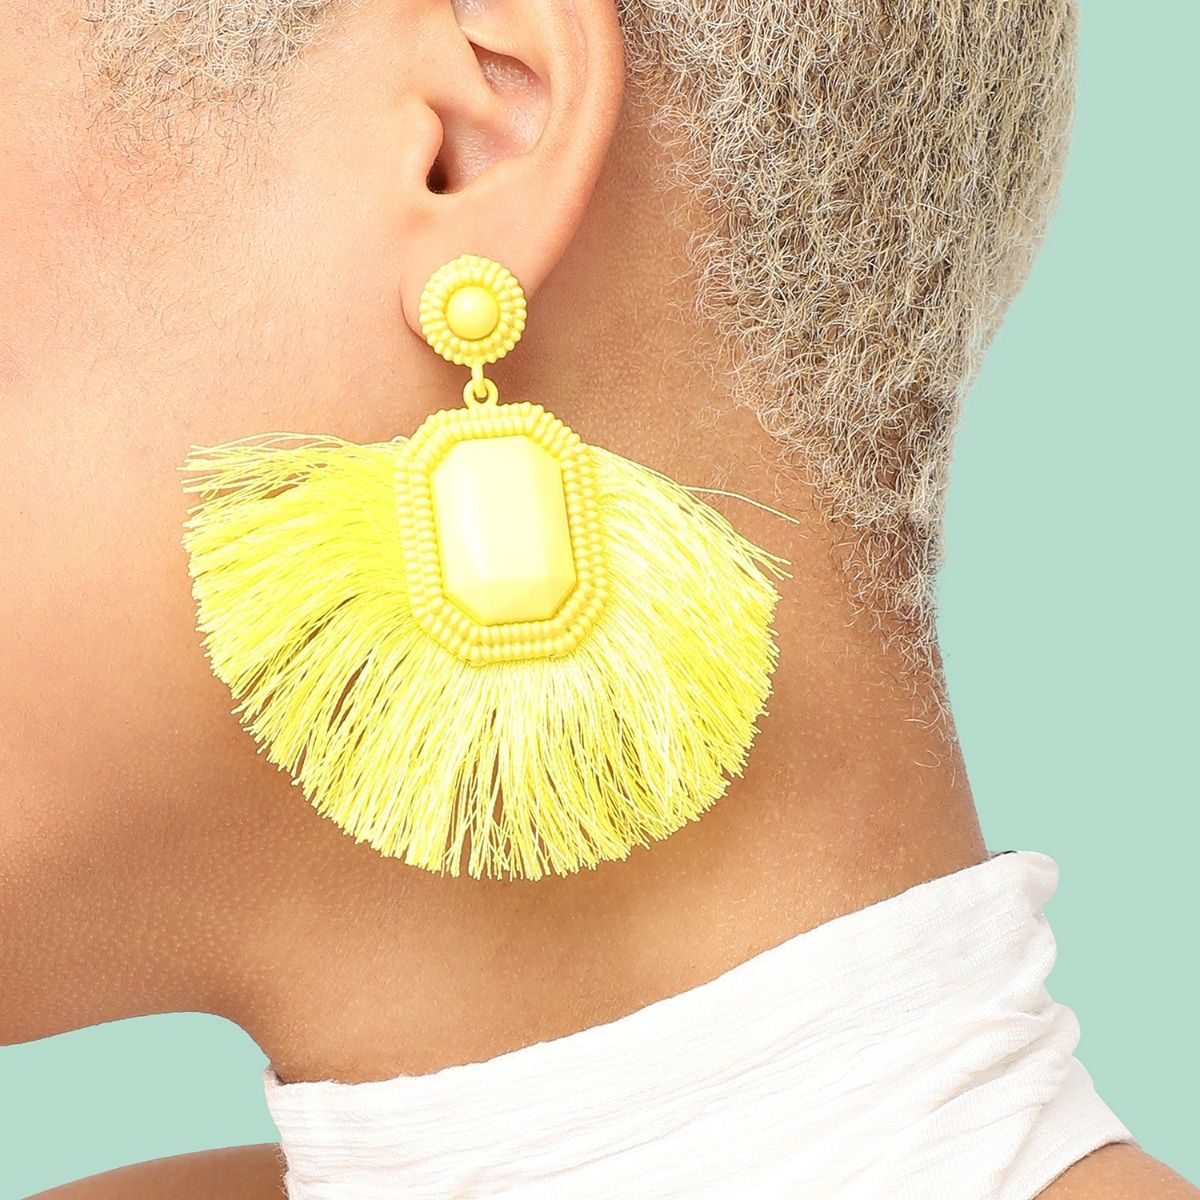 Buy Macrame Hoop Earrings Online  Rare Finds  Saanjh  Saanjh  Craft for  a fair future